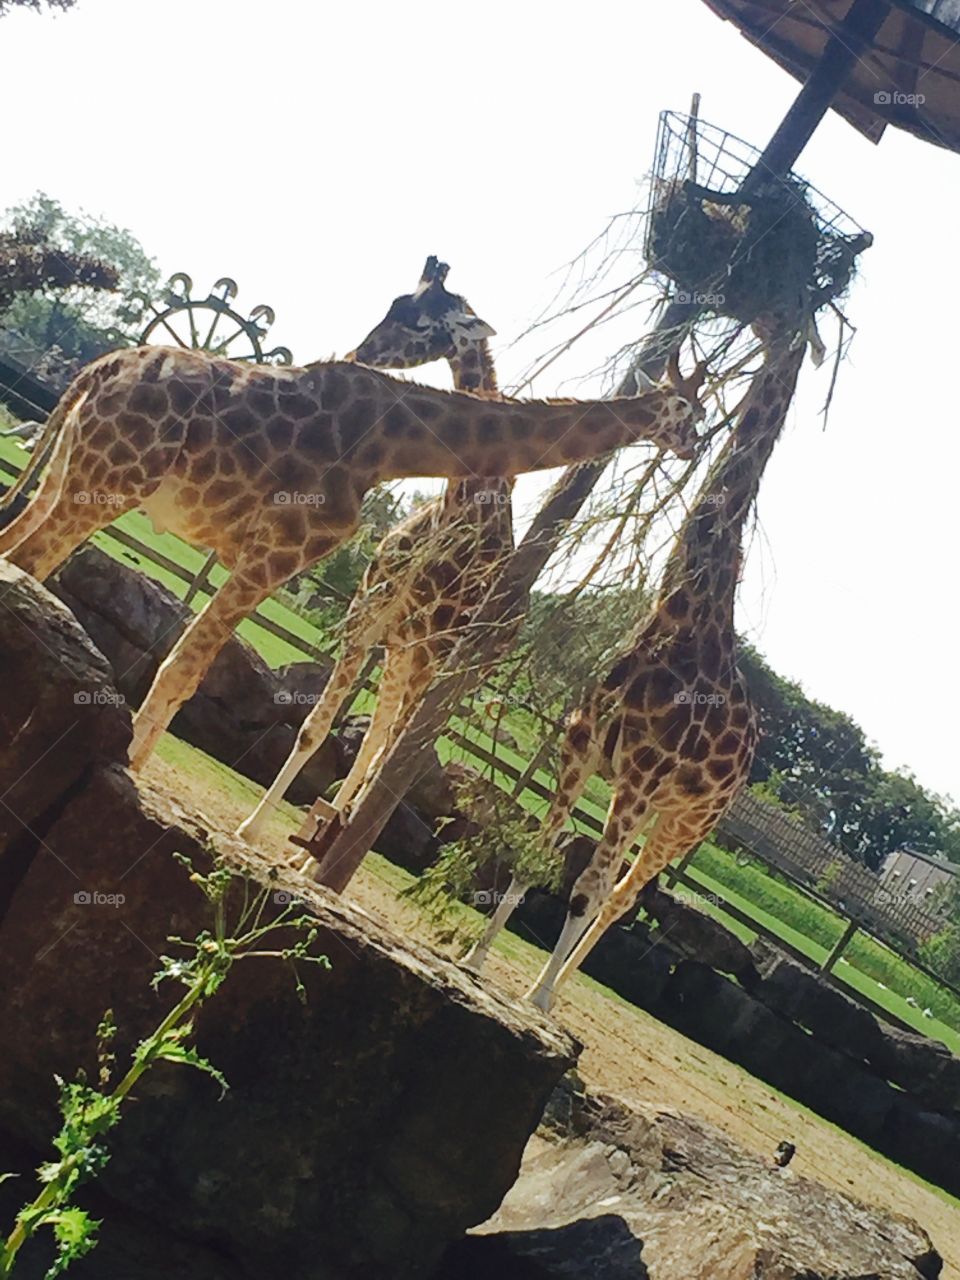 Giraffes at their own best